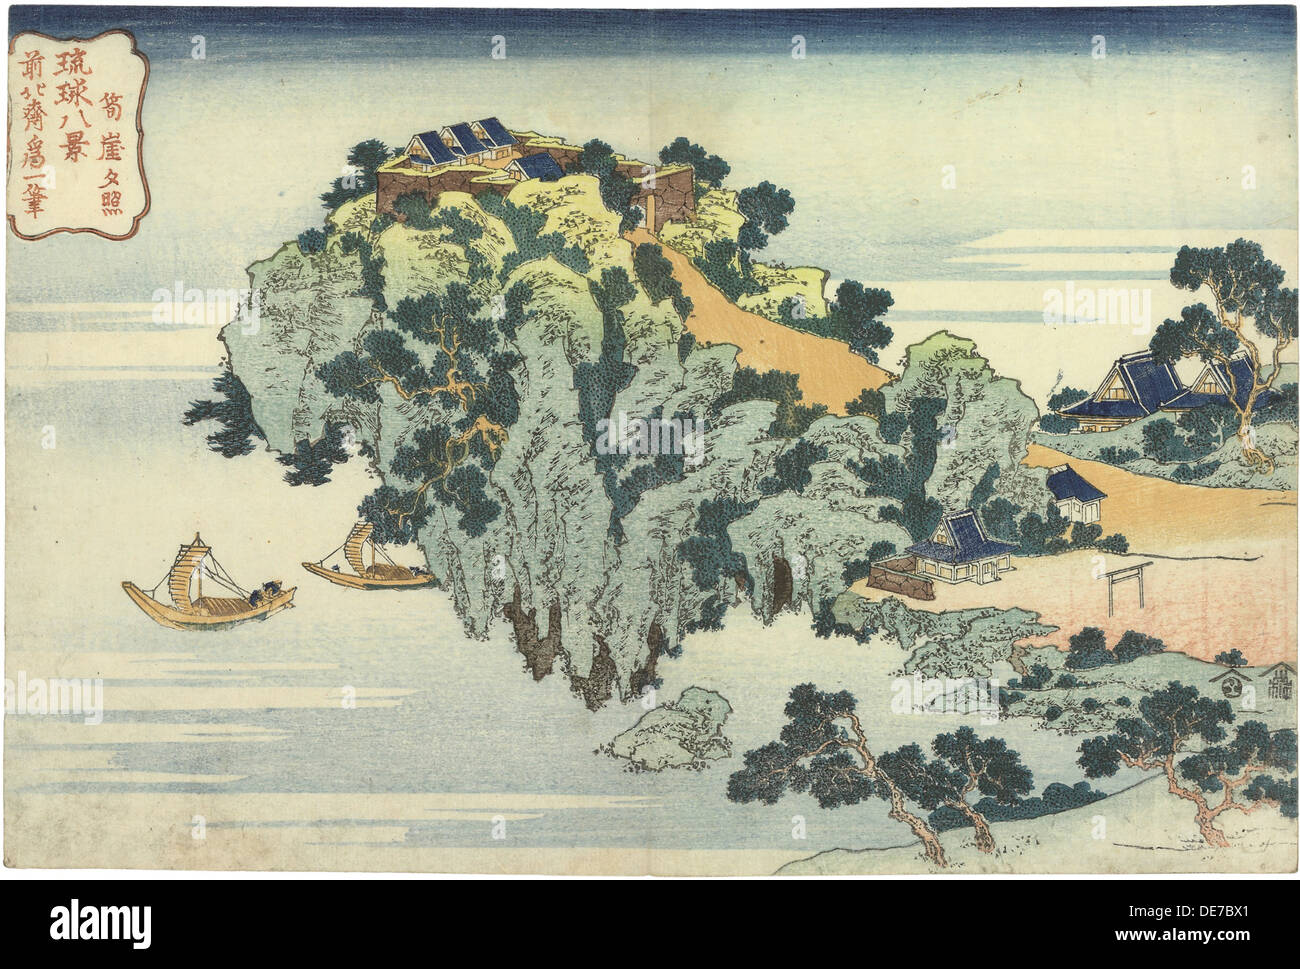 Jungai sekisho (Evening glow at Jungai). From the series Eight views of the Ryukyu Islands. Artist: Hokusai, Katsushika (1760-1849) Stock Photo